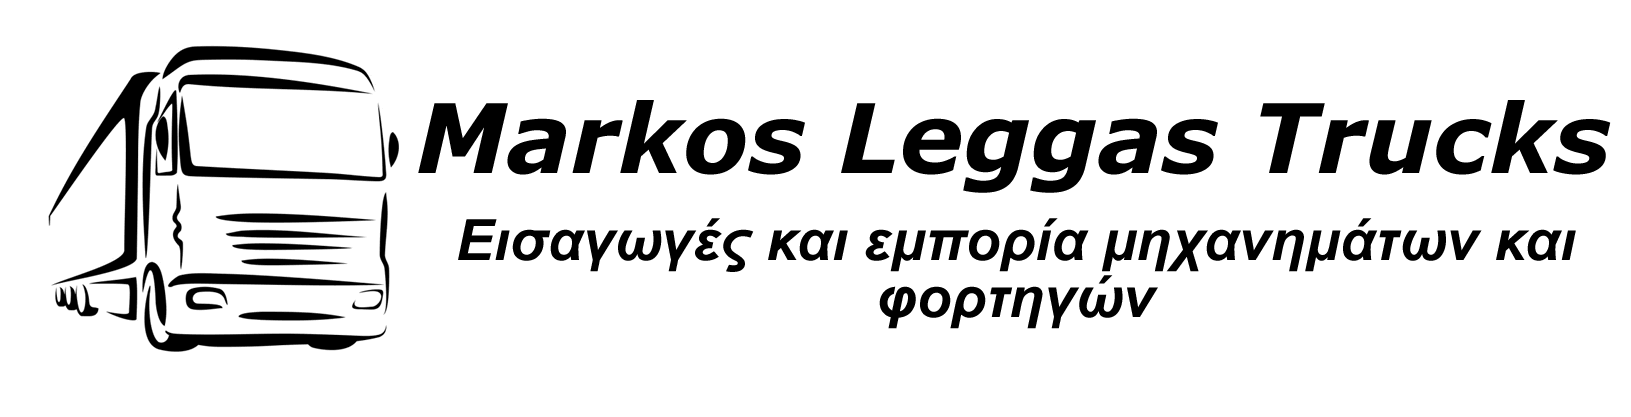 Markos Leggas Trucks